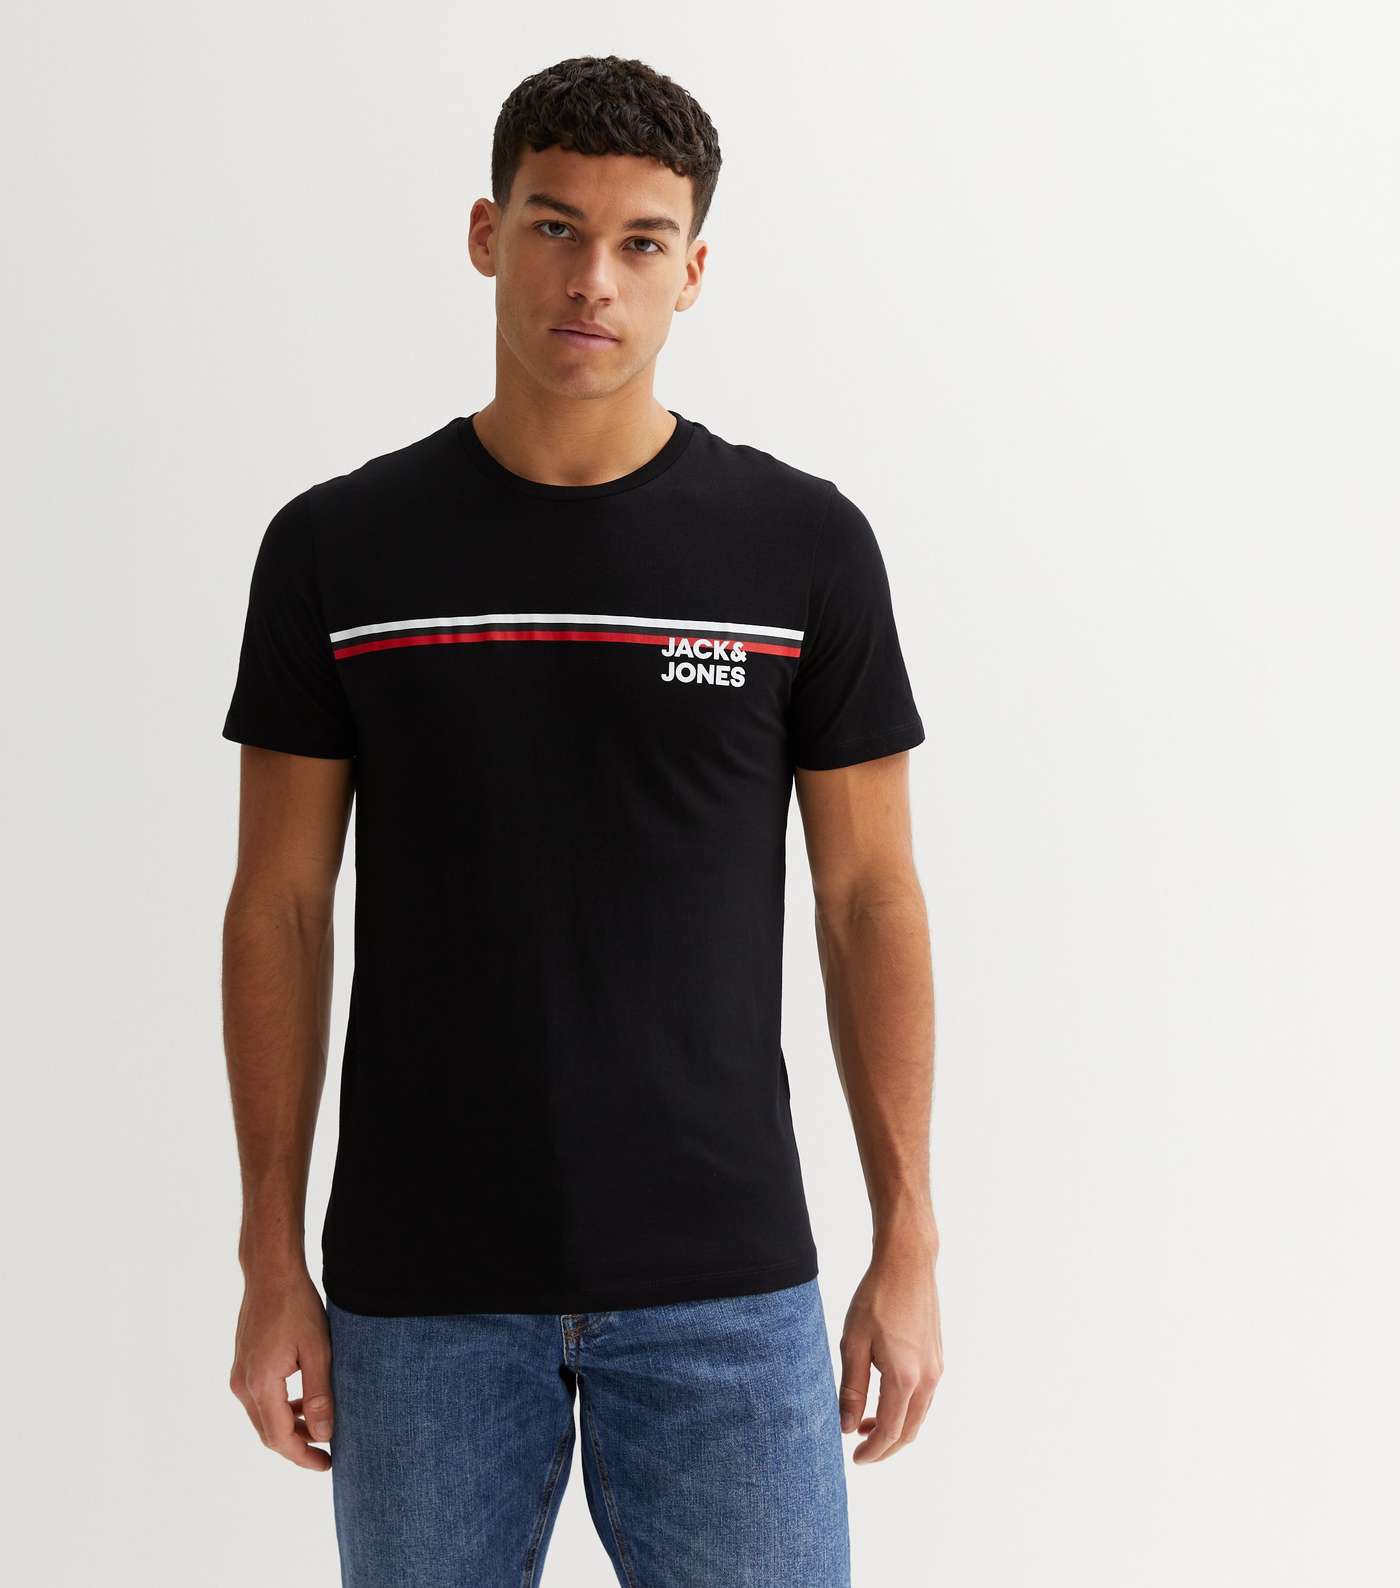 Jack & Jones Black Stripe Logo T-Shirt Image 2